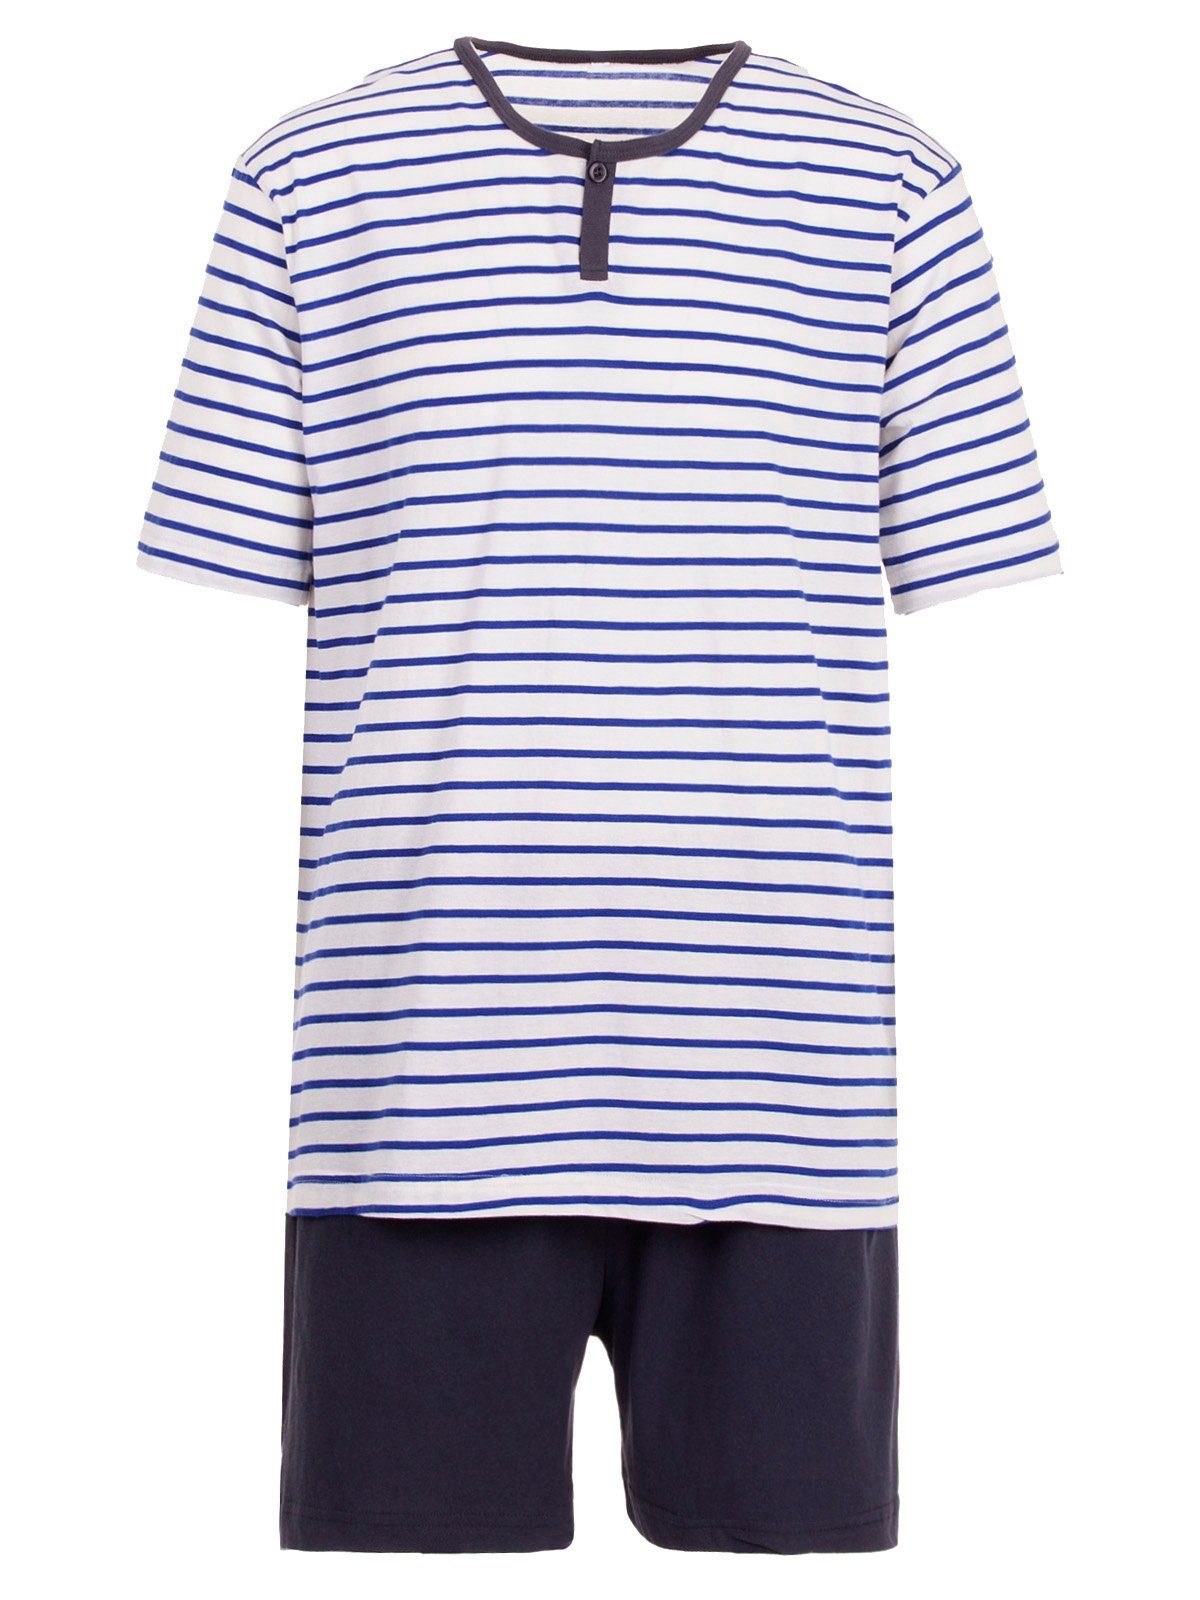 Henry Terre Schlafanzug Pyjama Set Shorty - Gestreift mit Knopf blau